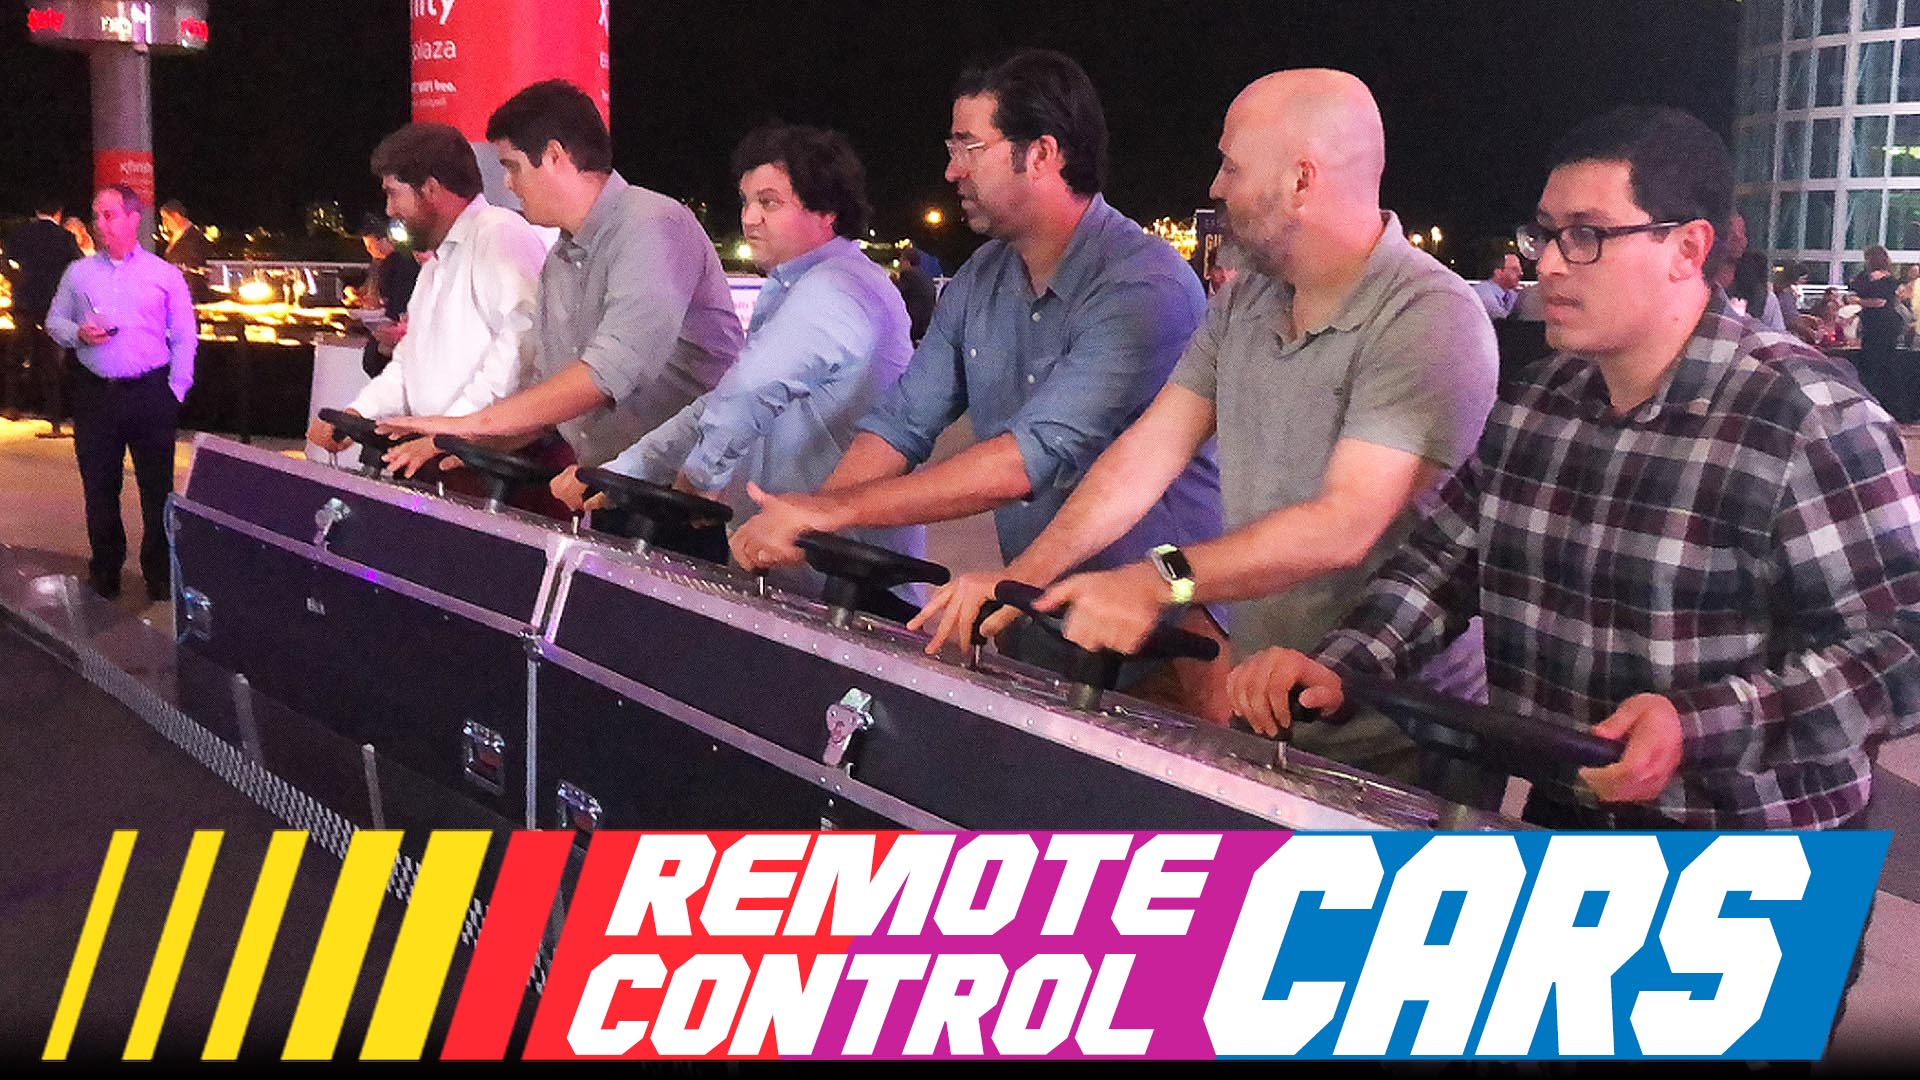 remote control rc car racing party rental in florida